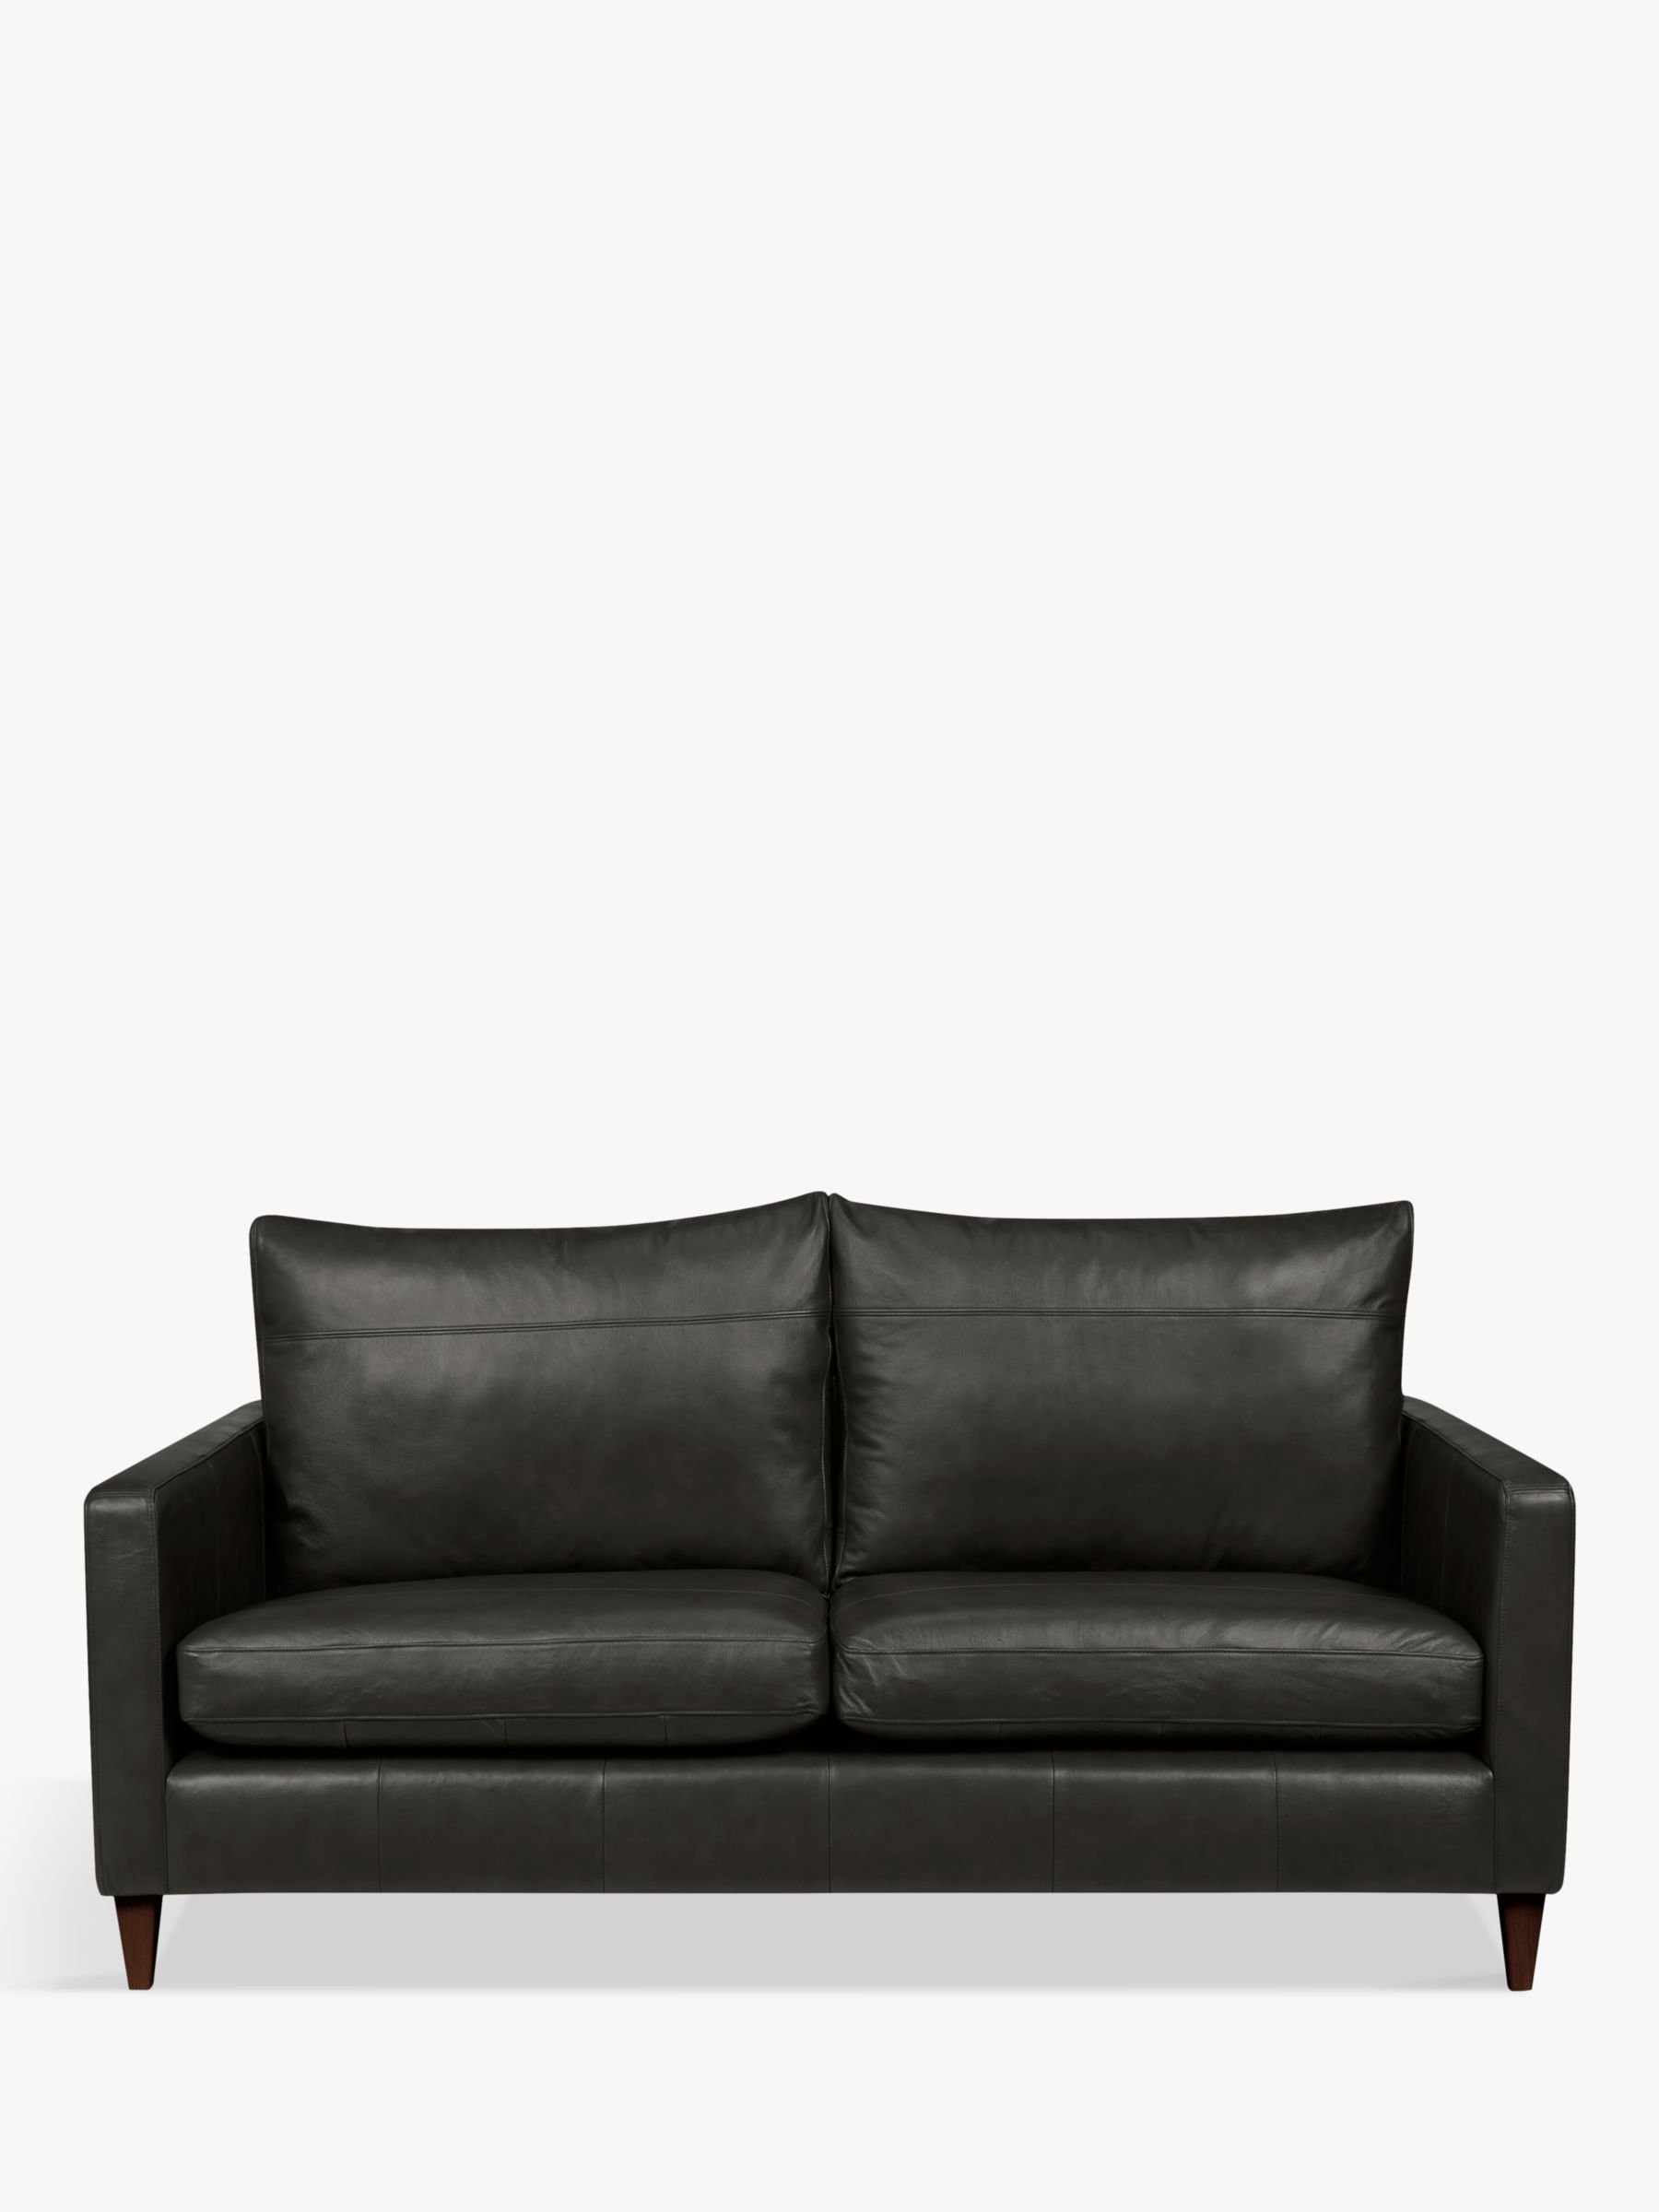 John Lewis Bailey Medium 2 Seater Leather Sofa, Dark Leg